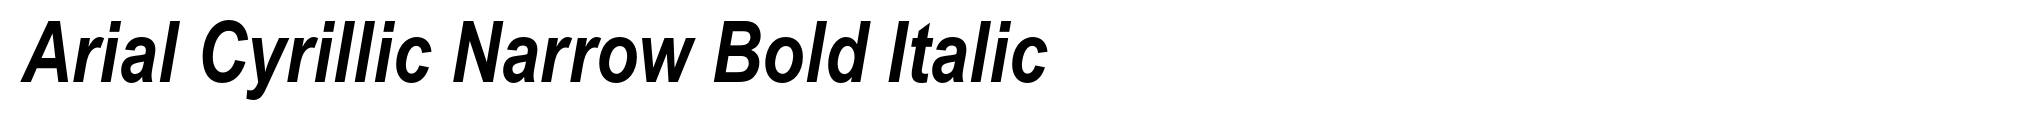 Arial Cyrillic Narrow Bold Italic image